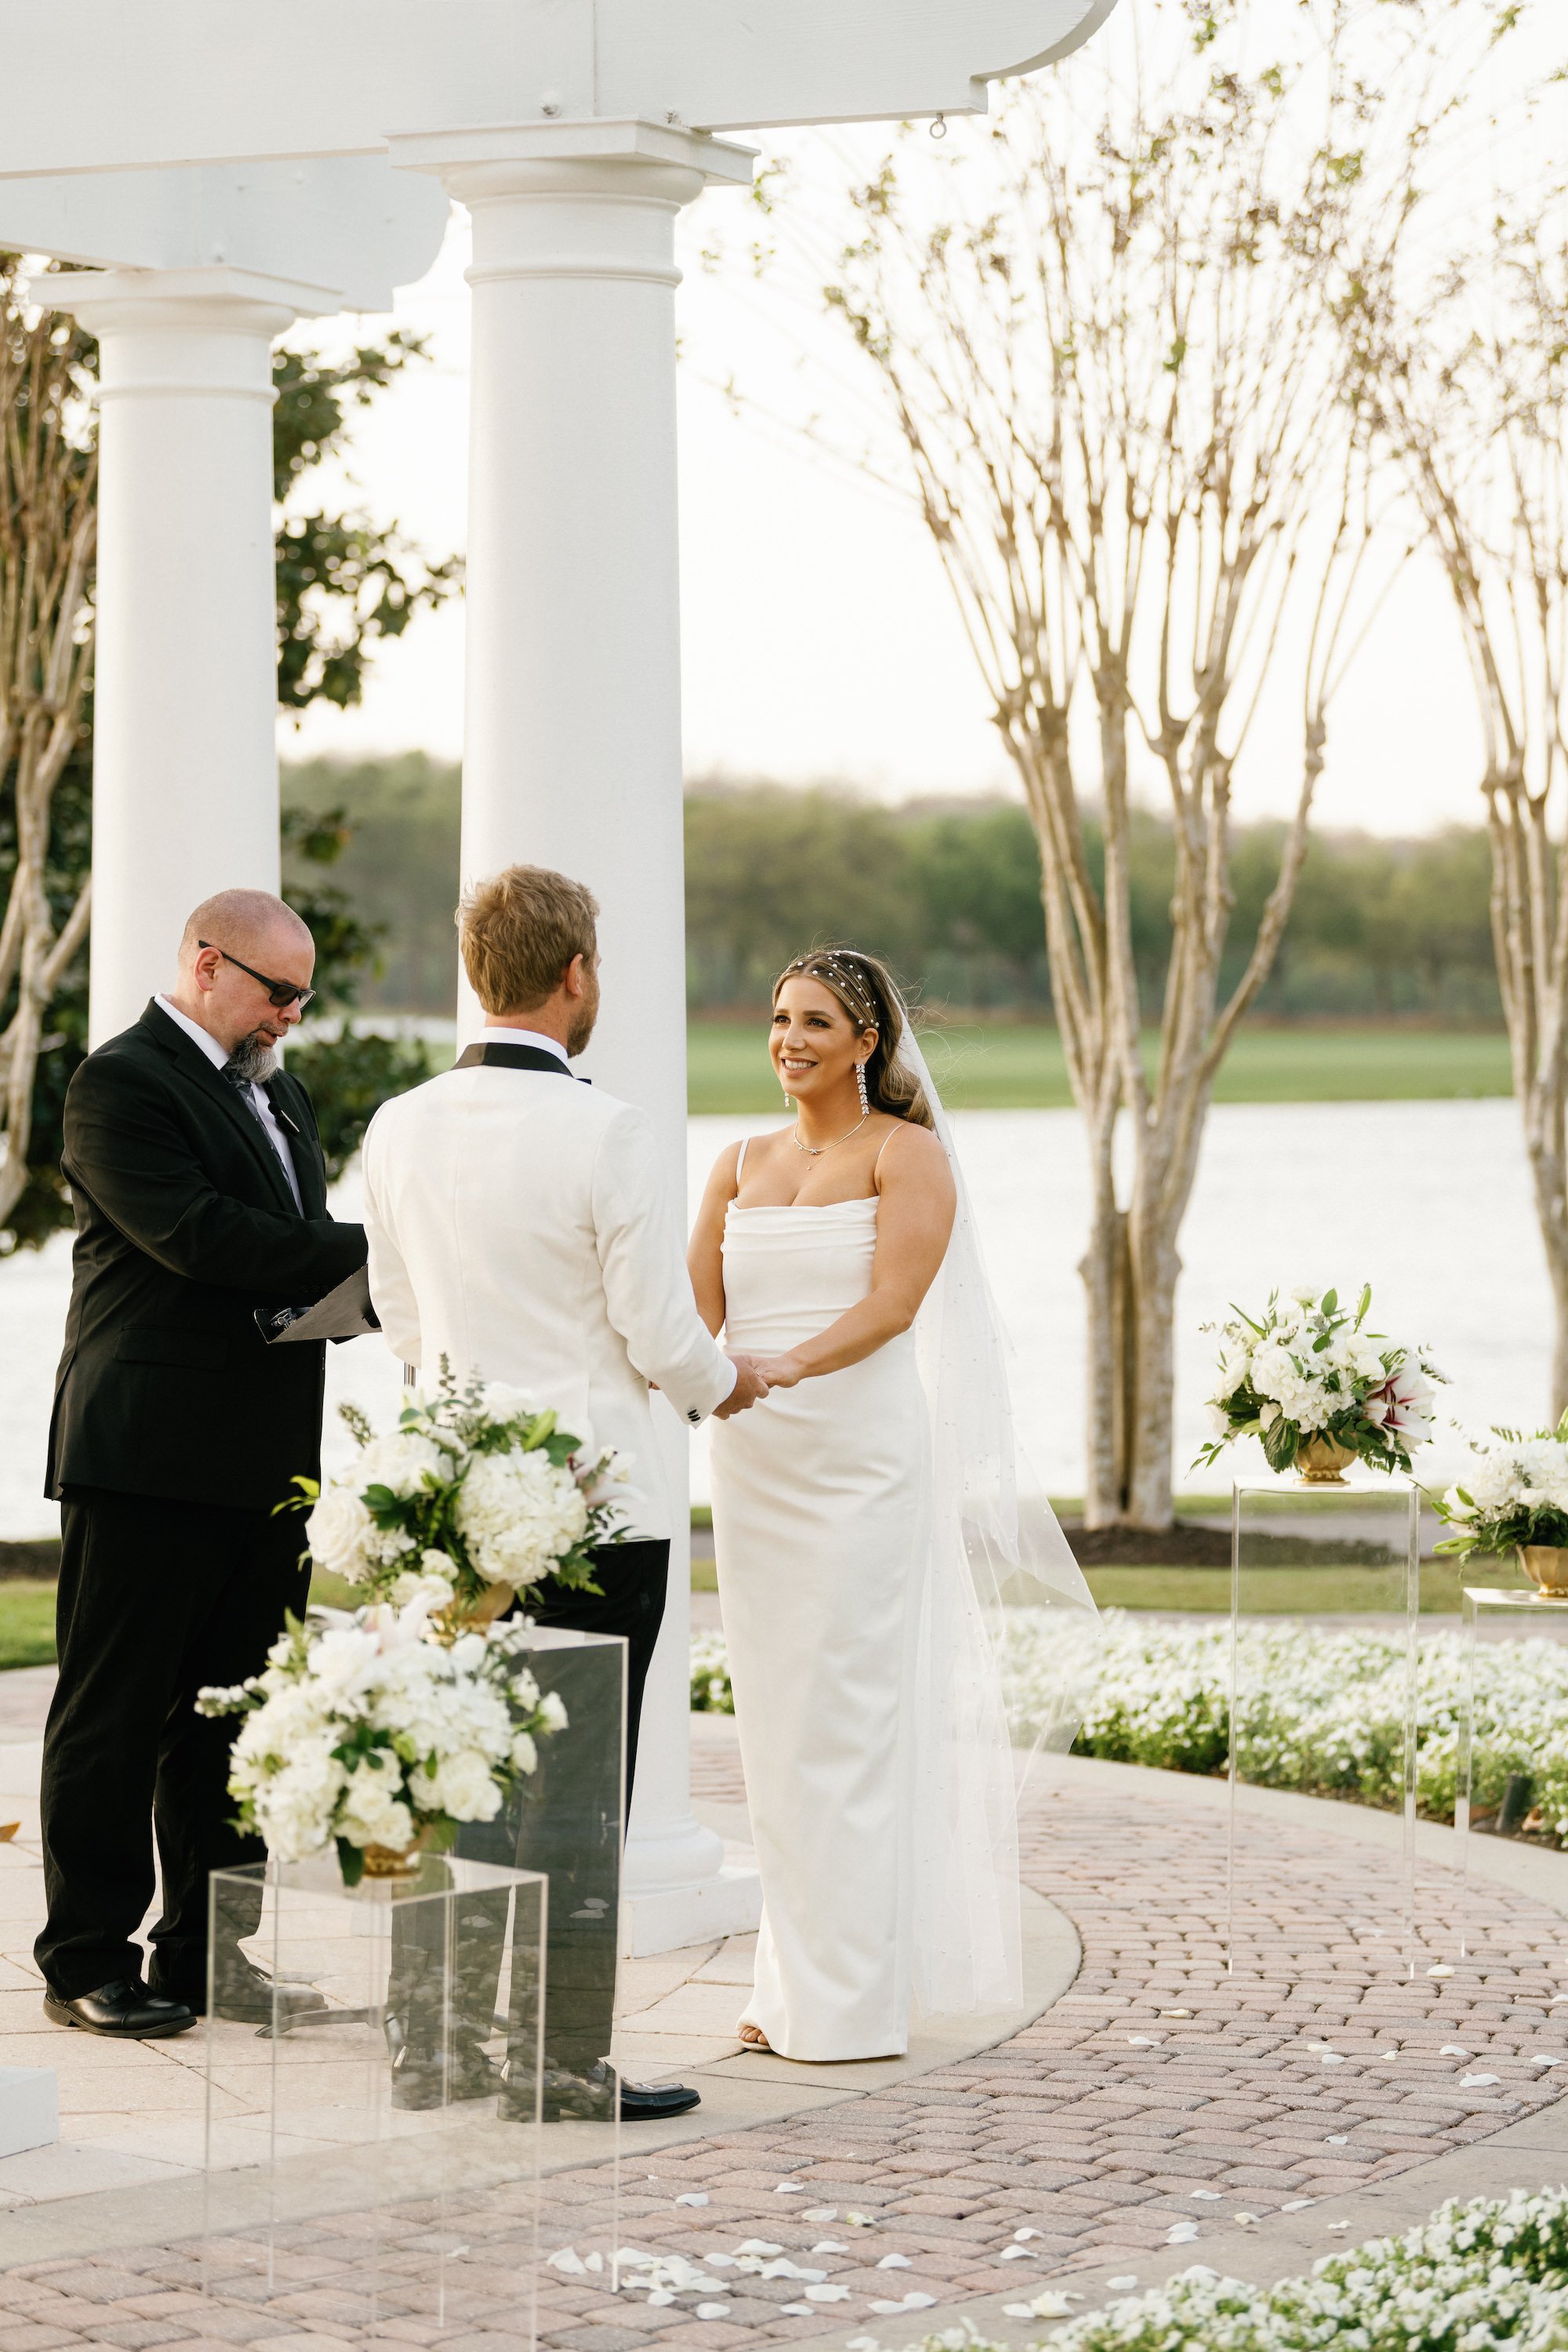 22Timeless White Courtyard Wedding | Ritz Carlton Orlando | Photographers Dewitt for Love Photography.jpg